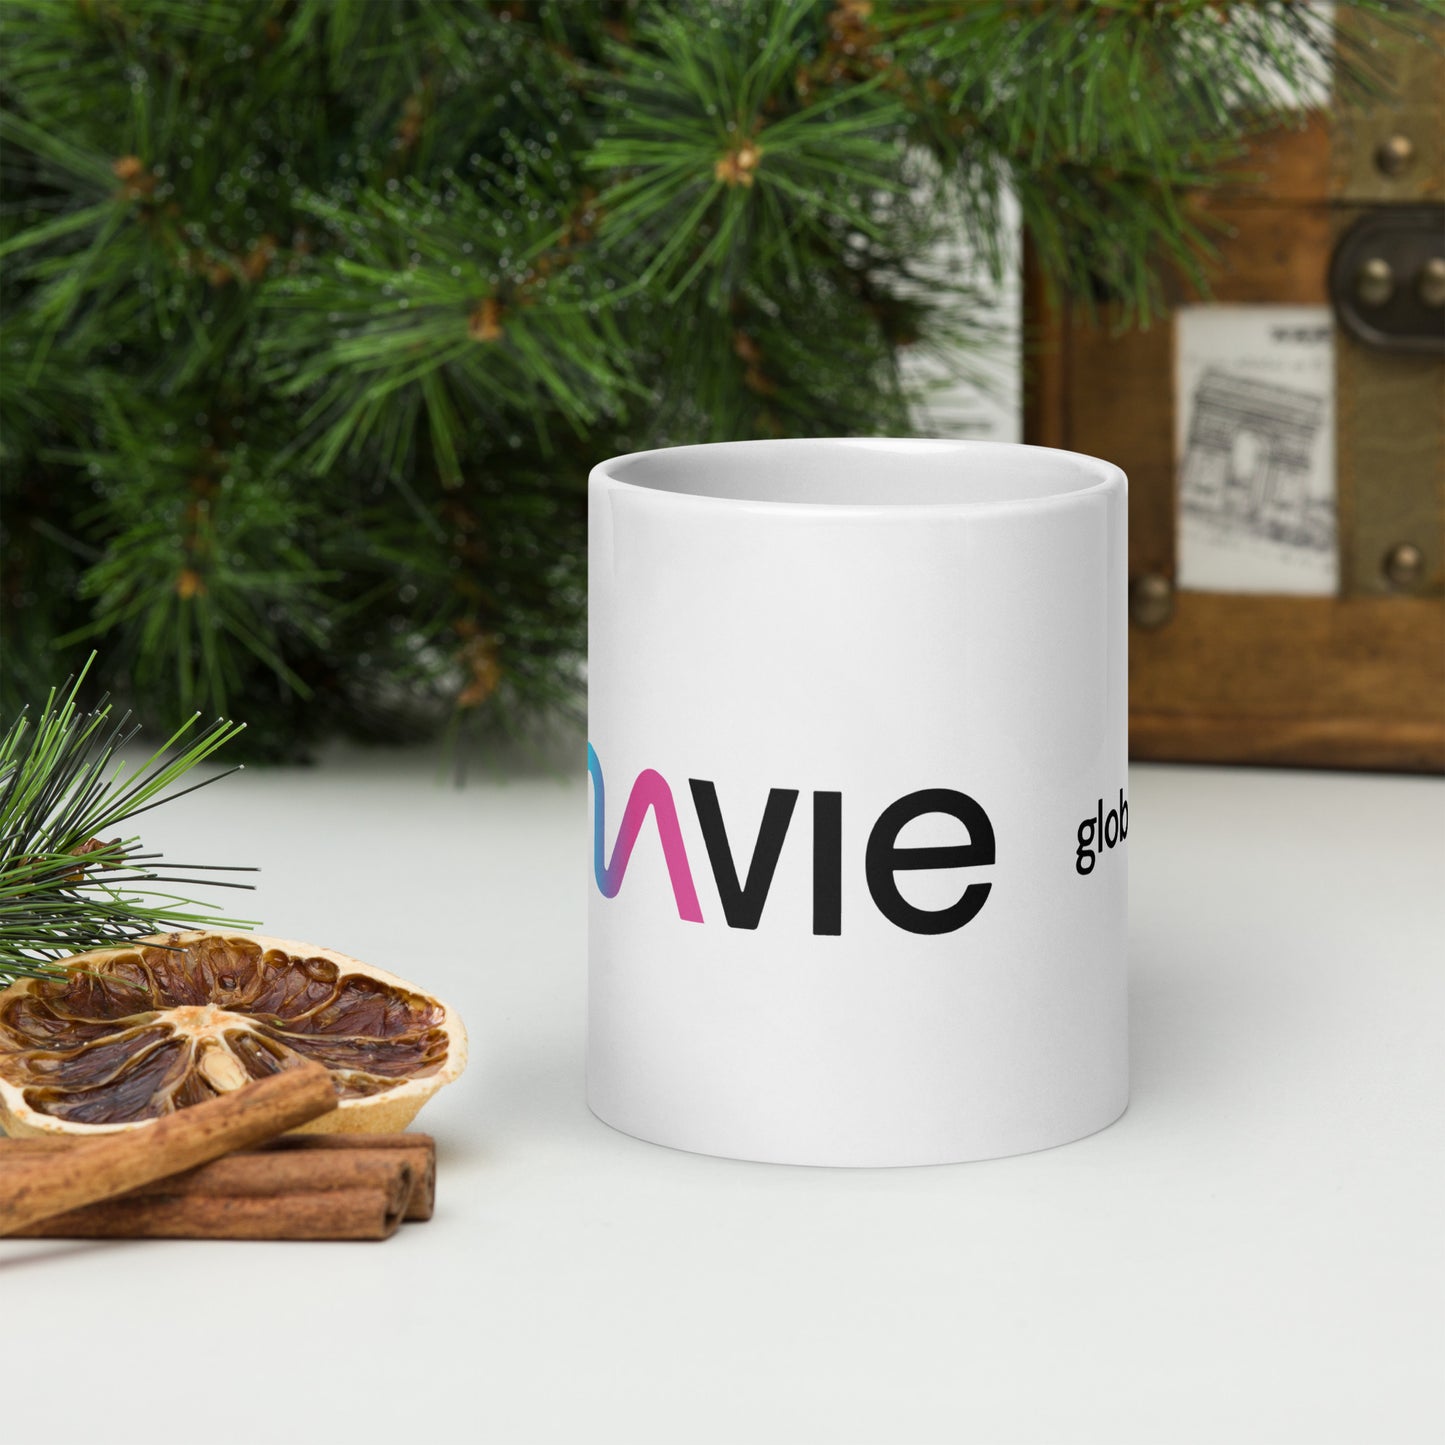 Mavie Global White glossy mug